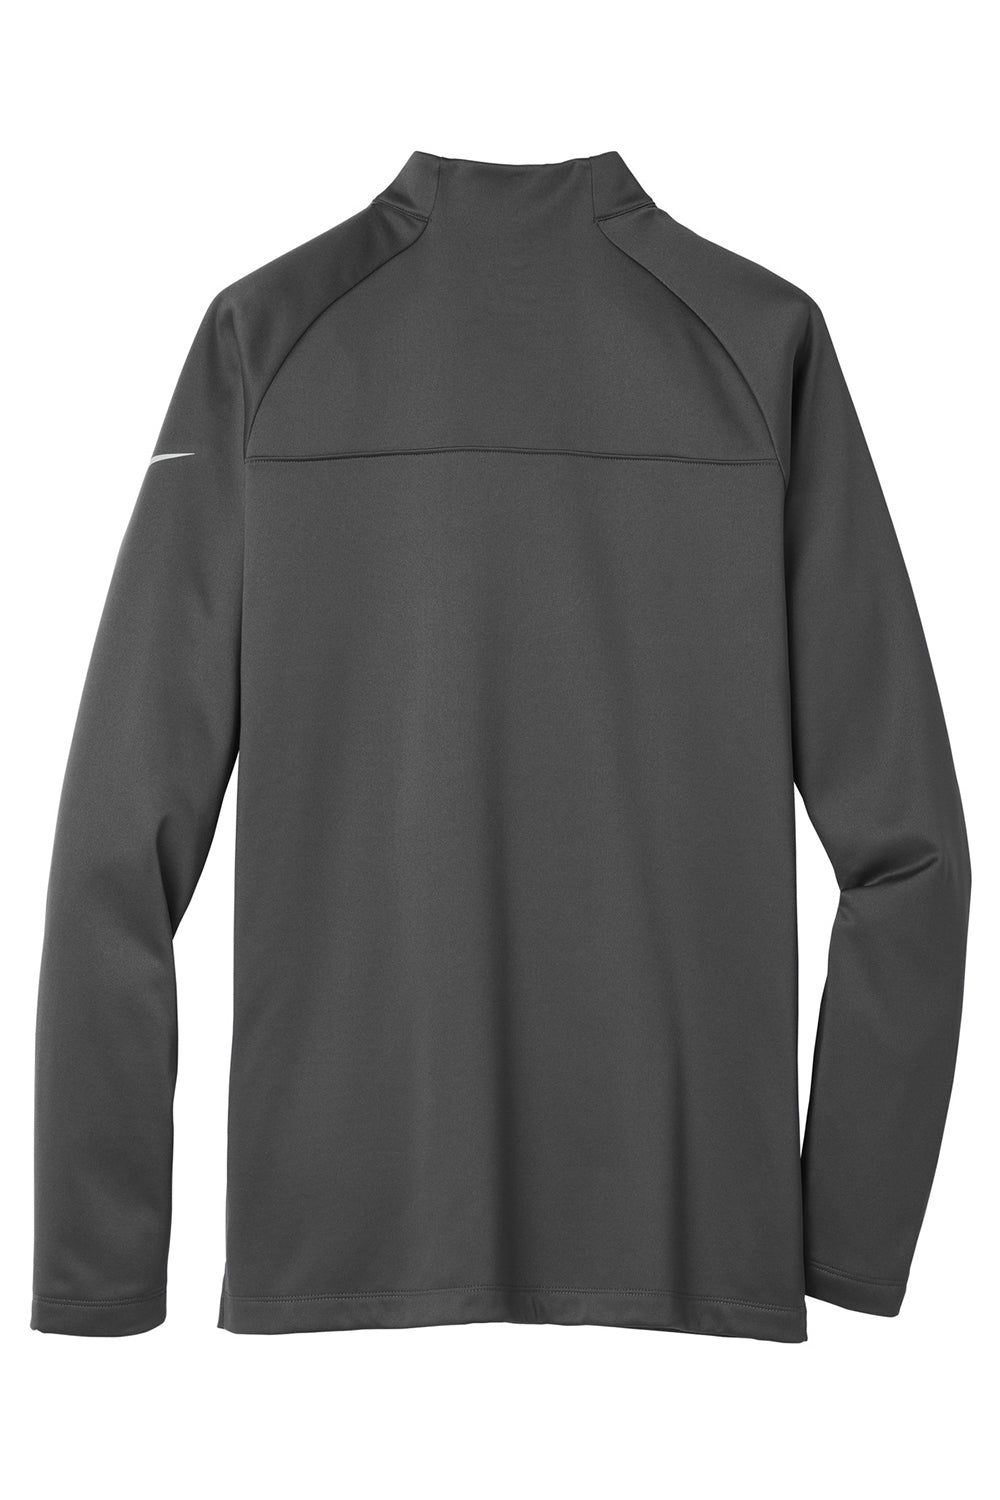 Nike NKAH6254 Mens Therma-Fit Moisture Wicking Fleece 1/4 Zip Sweatshirt Anthracite Grey Flat Back